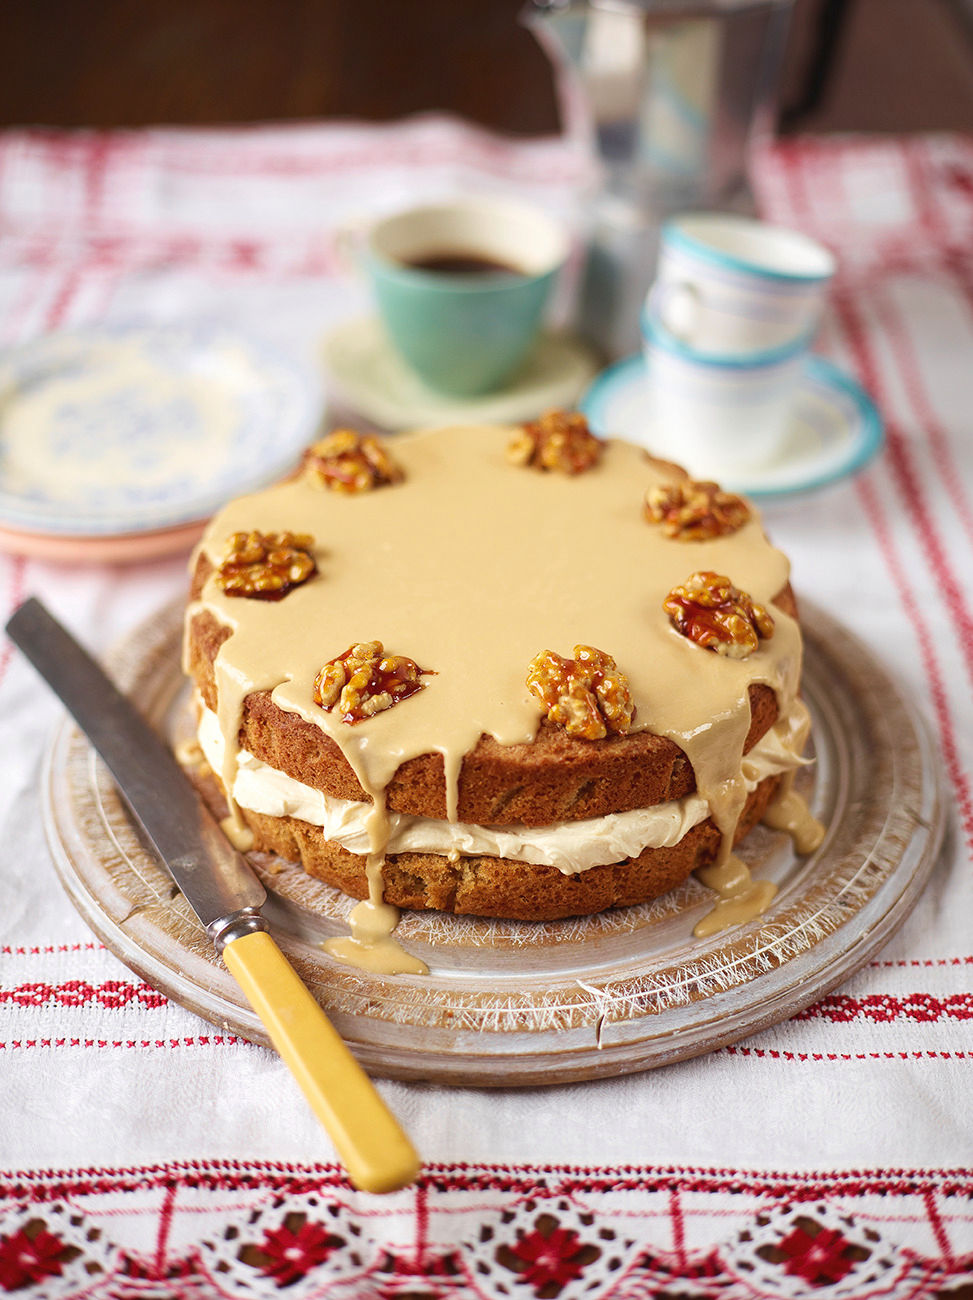 Gâteau aux noix (walnut cake) | Toubab recipes